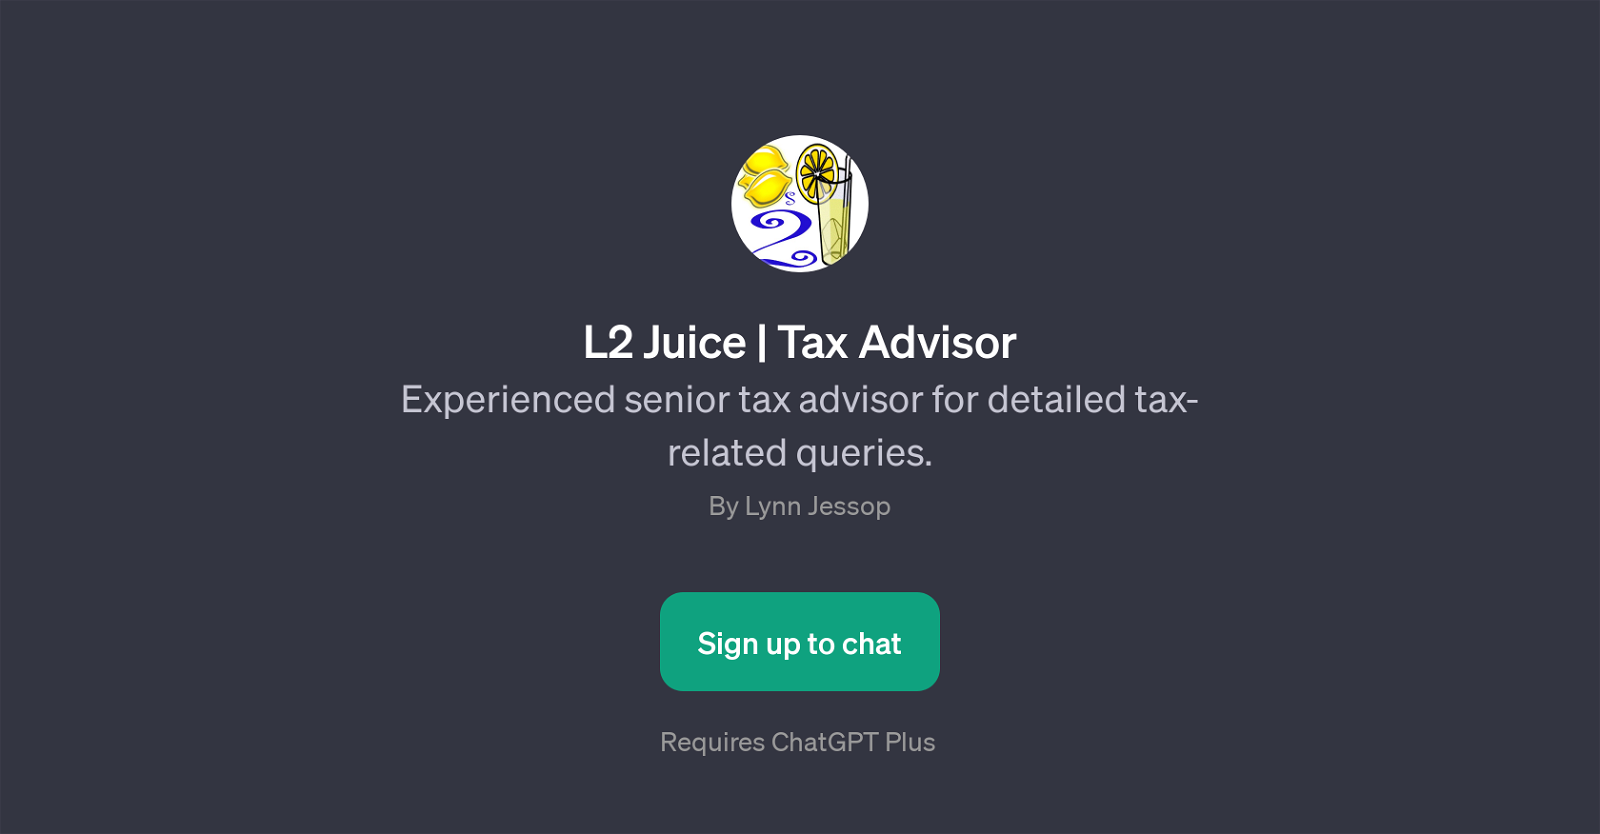 L2 Juice | Tax Advisor website